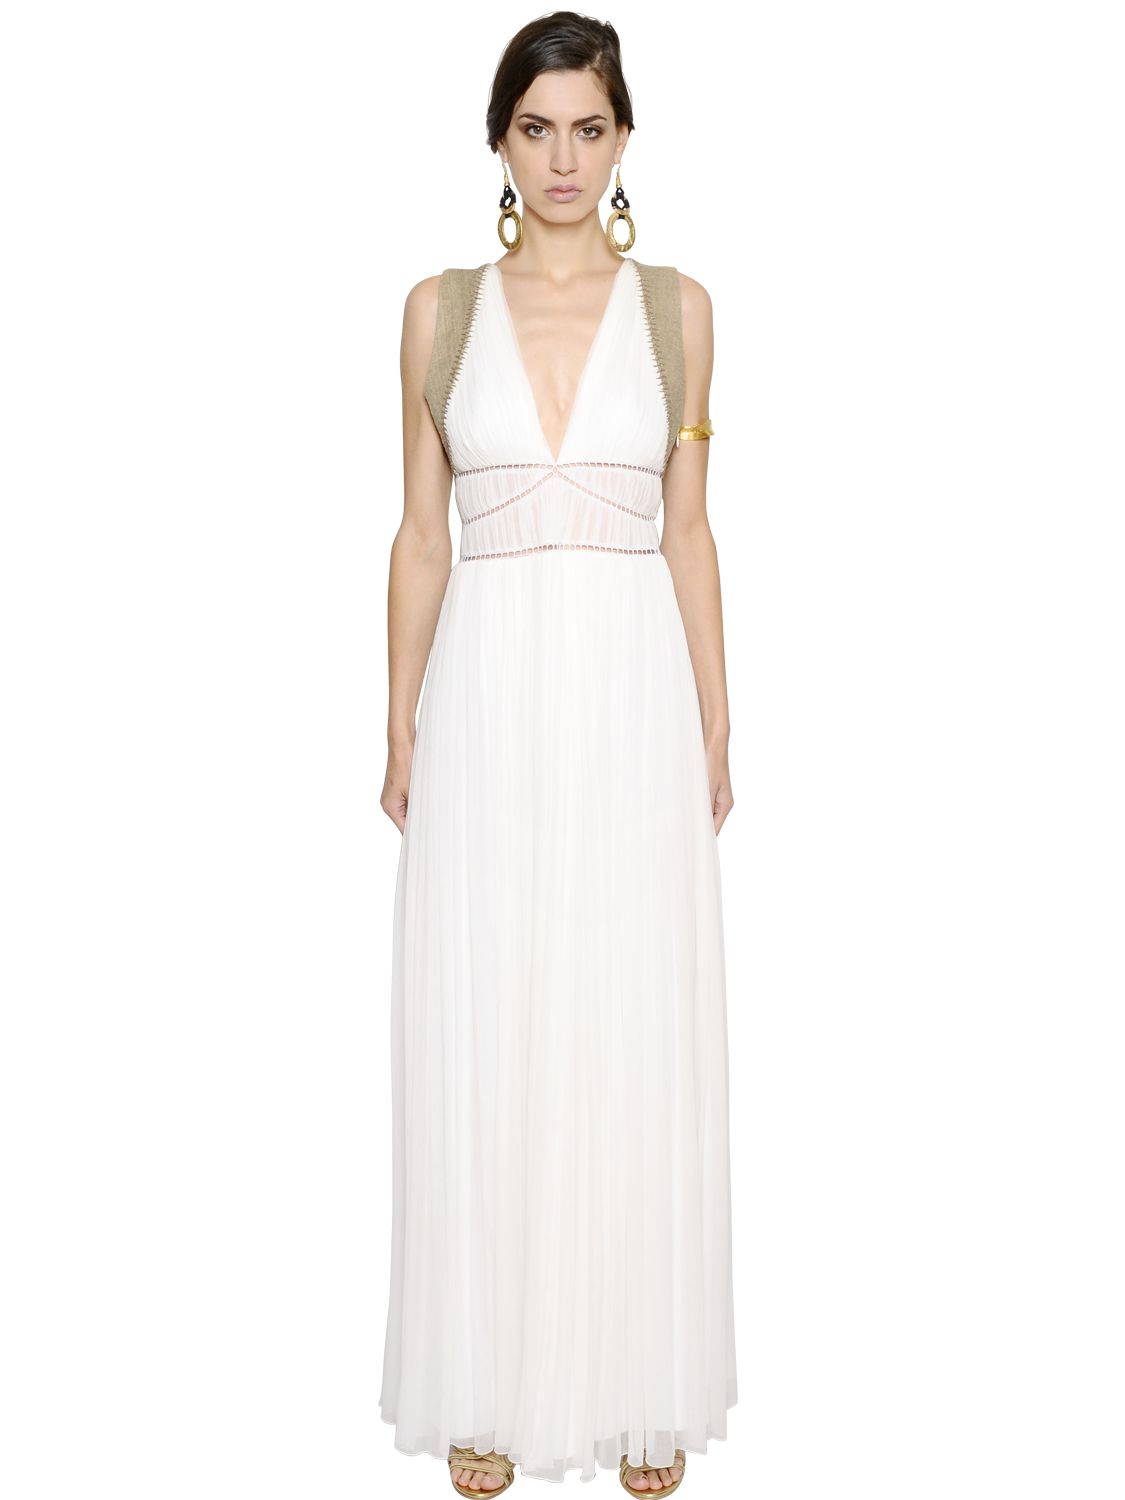 Alberta Ferretti Lace Long Dress in White - Lyst